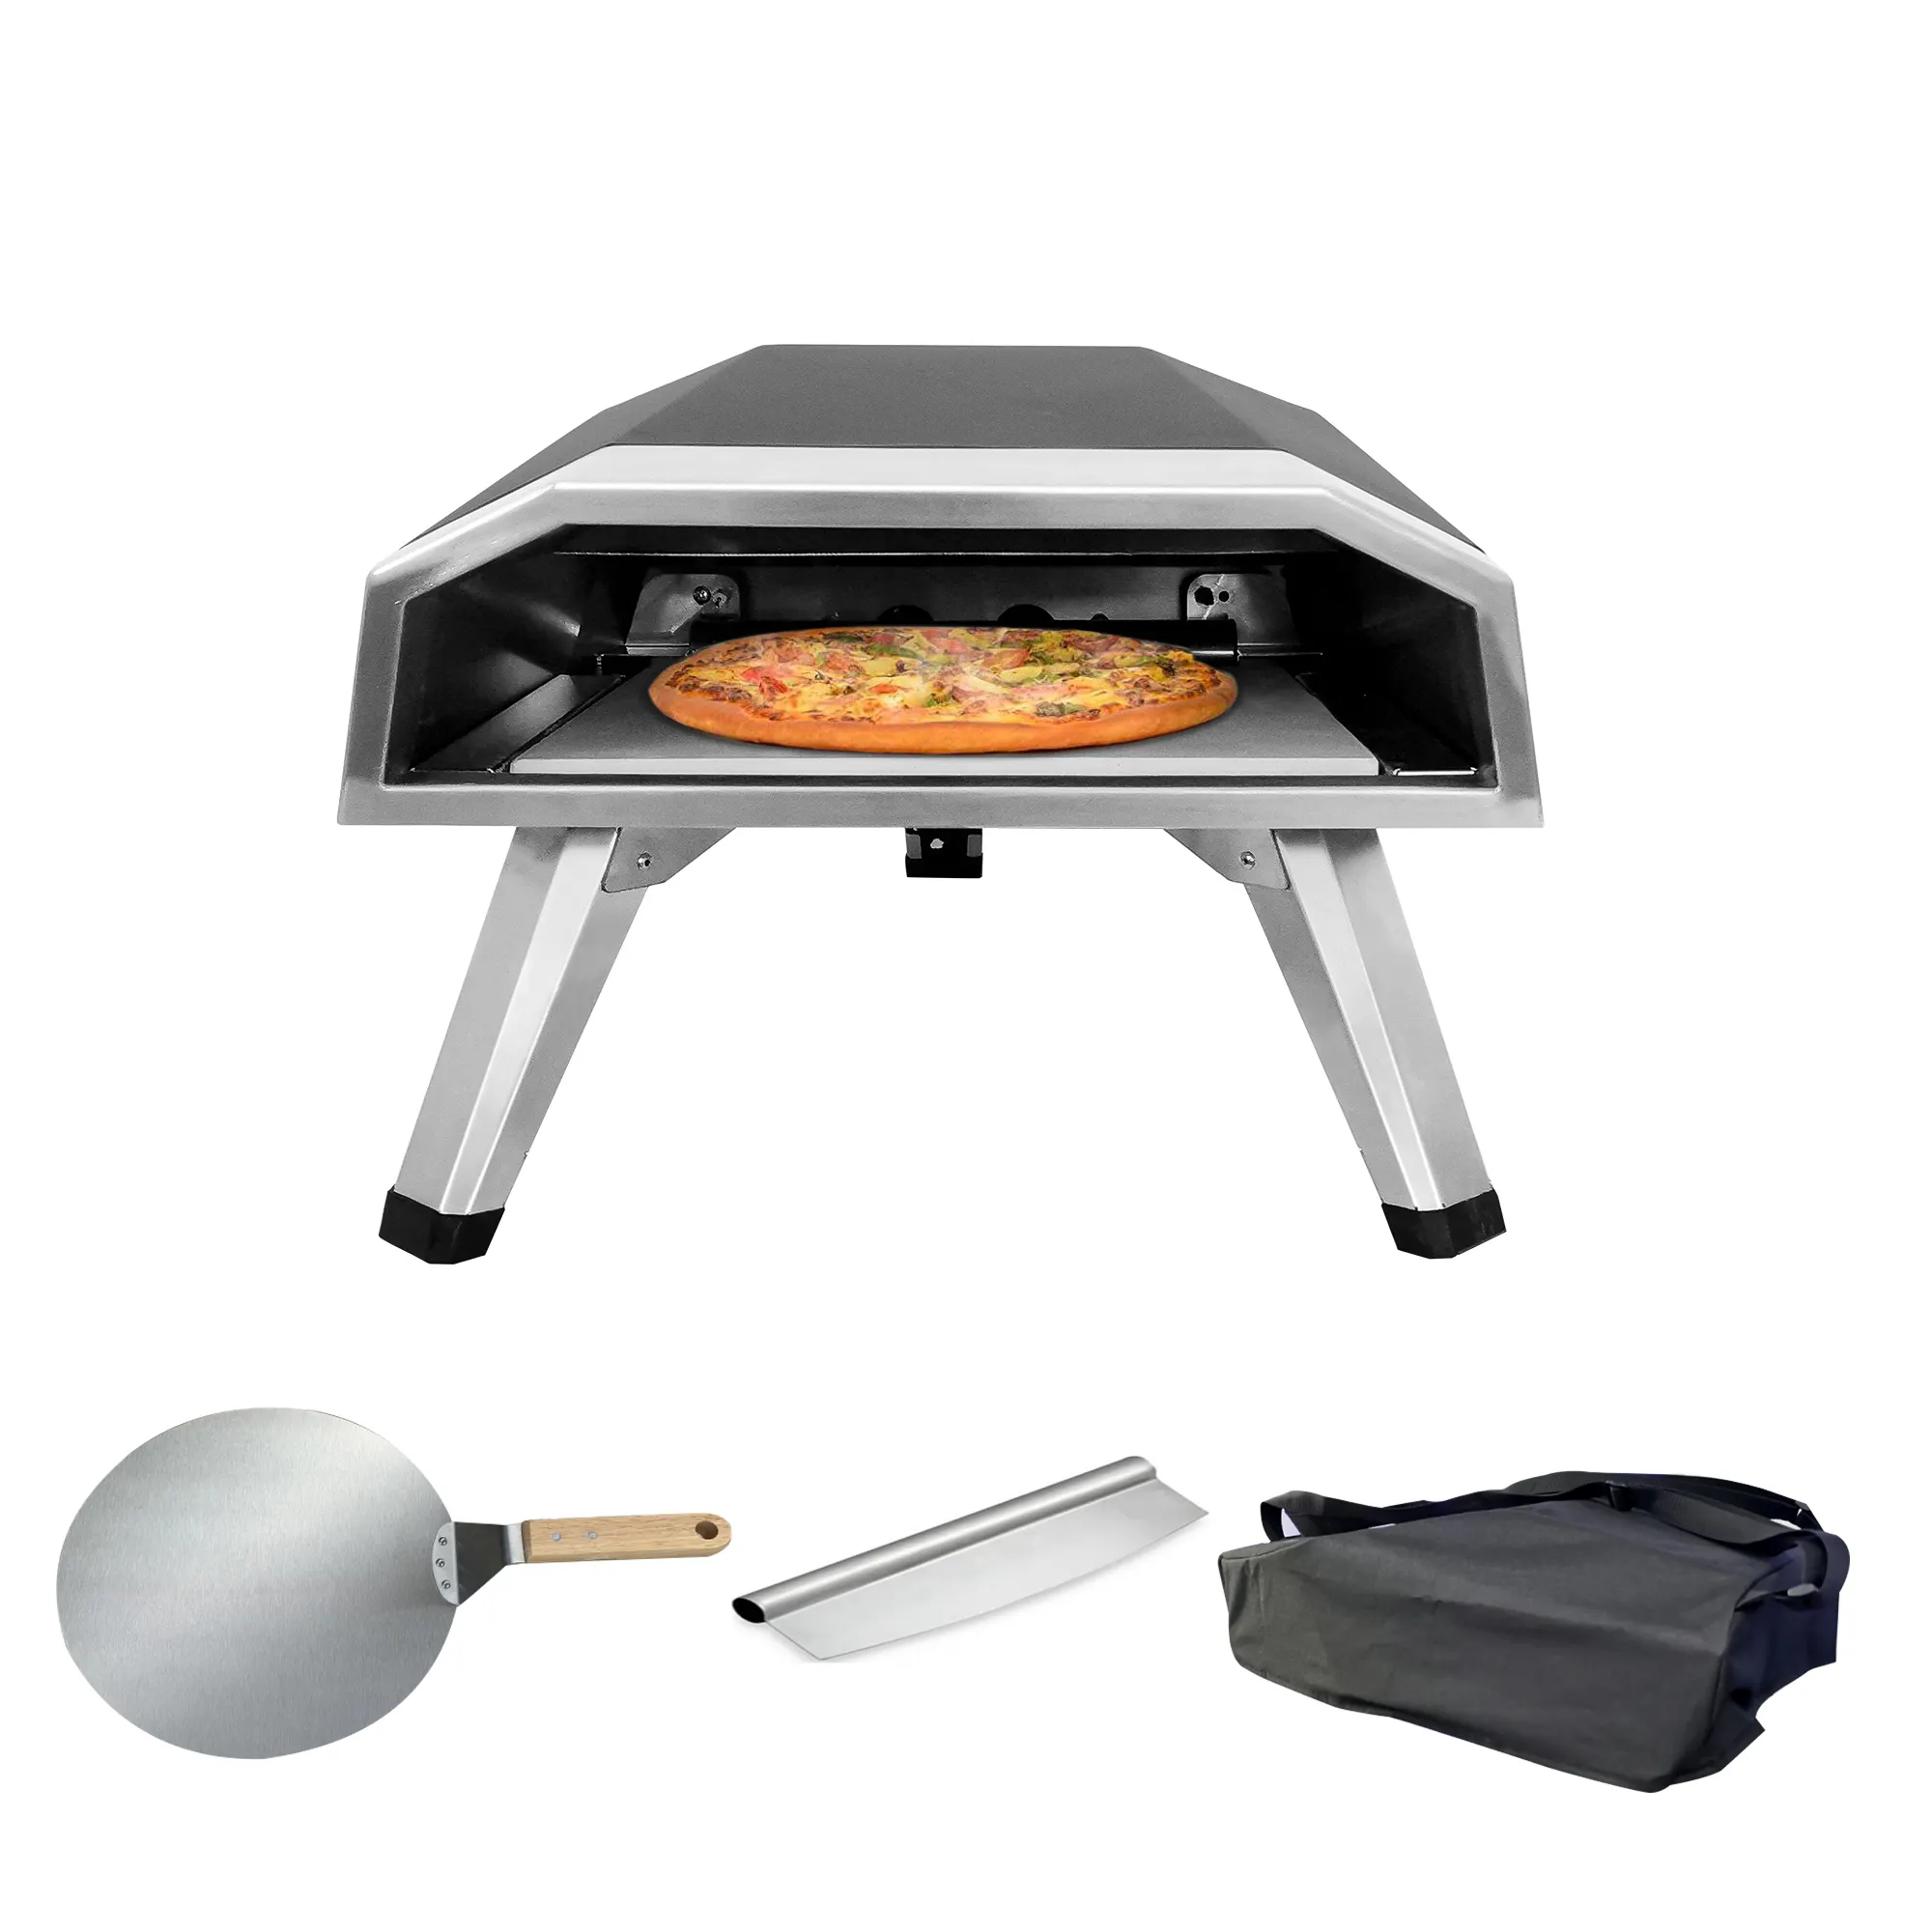 Harga Oven Pizza Gas Memasak Rumah Pizza, Oven Roti Dapur Luar Ruangan Taman Jerman